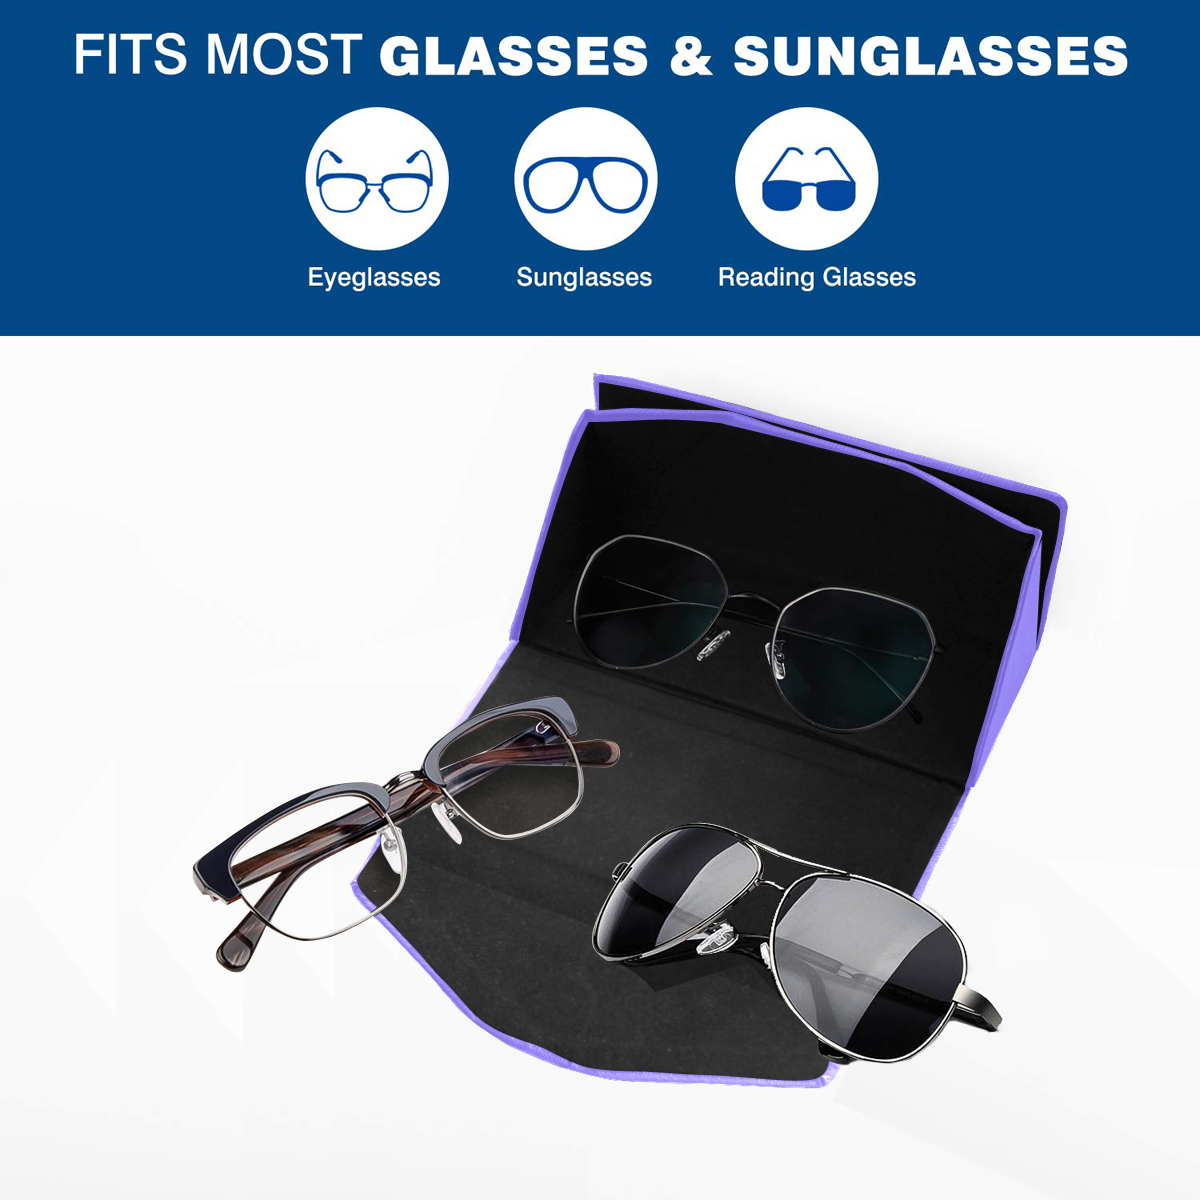 color medium slate blue Custom Foldable Glasses Case